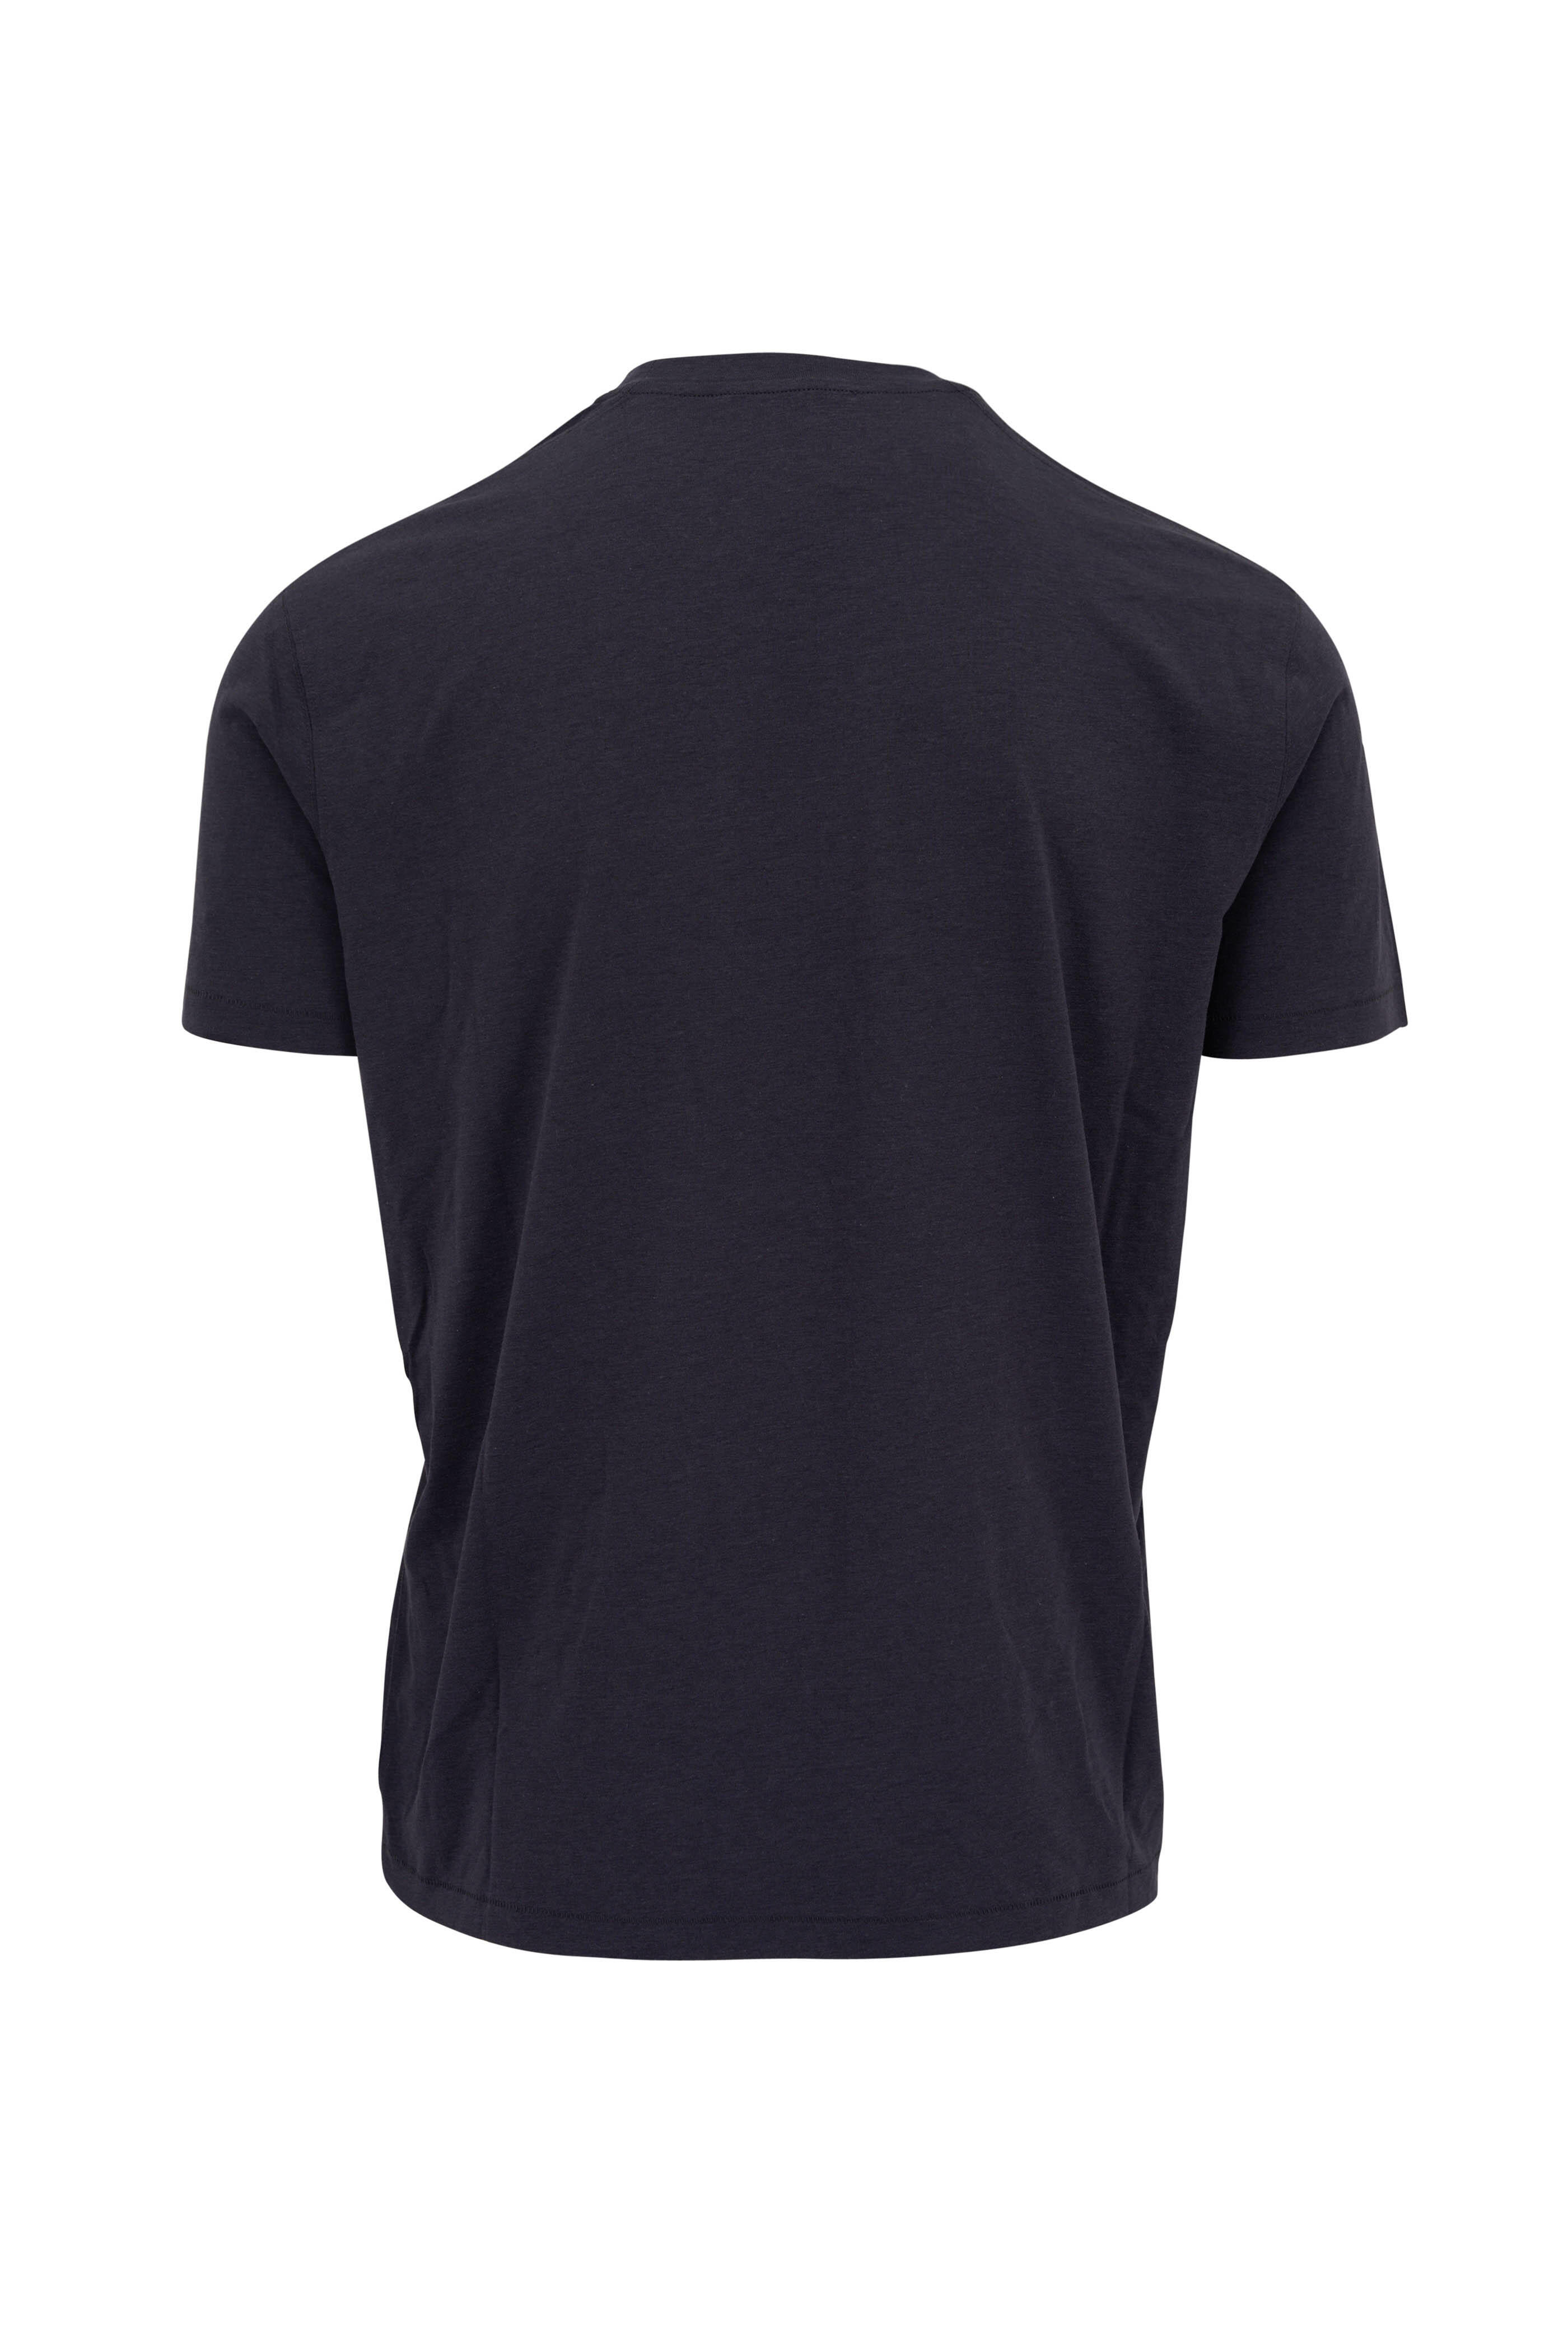 Tom Ford - Dark Blue Crewneck T-Shirt | Mitchell Stores